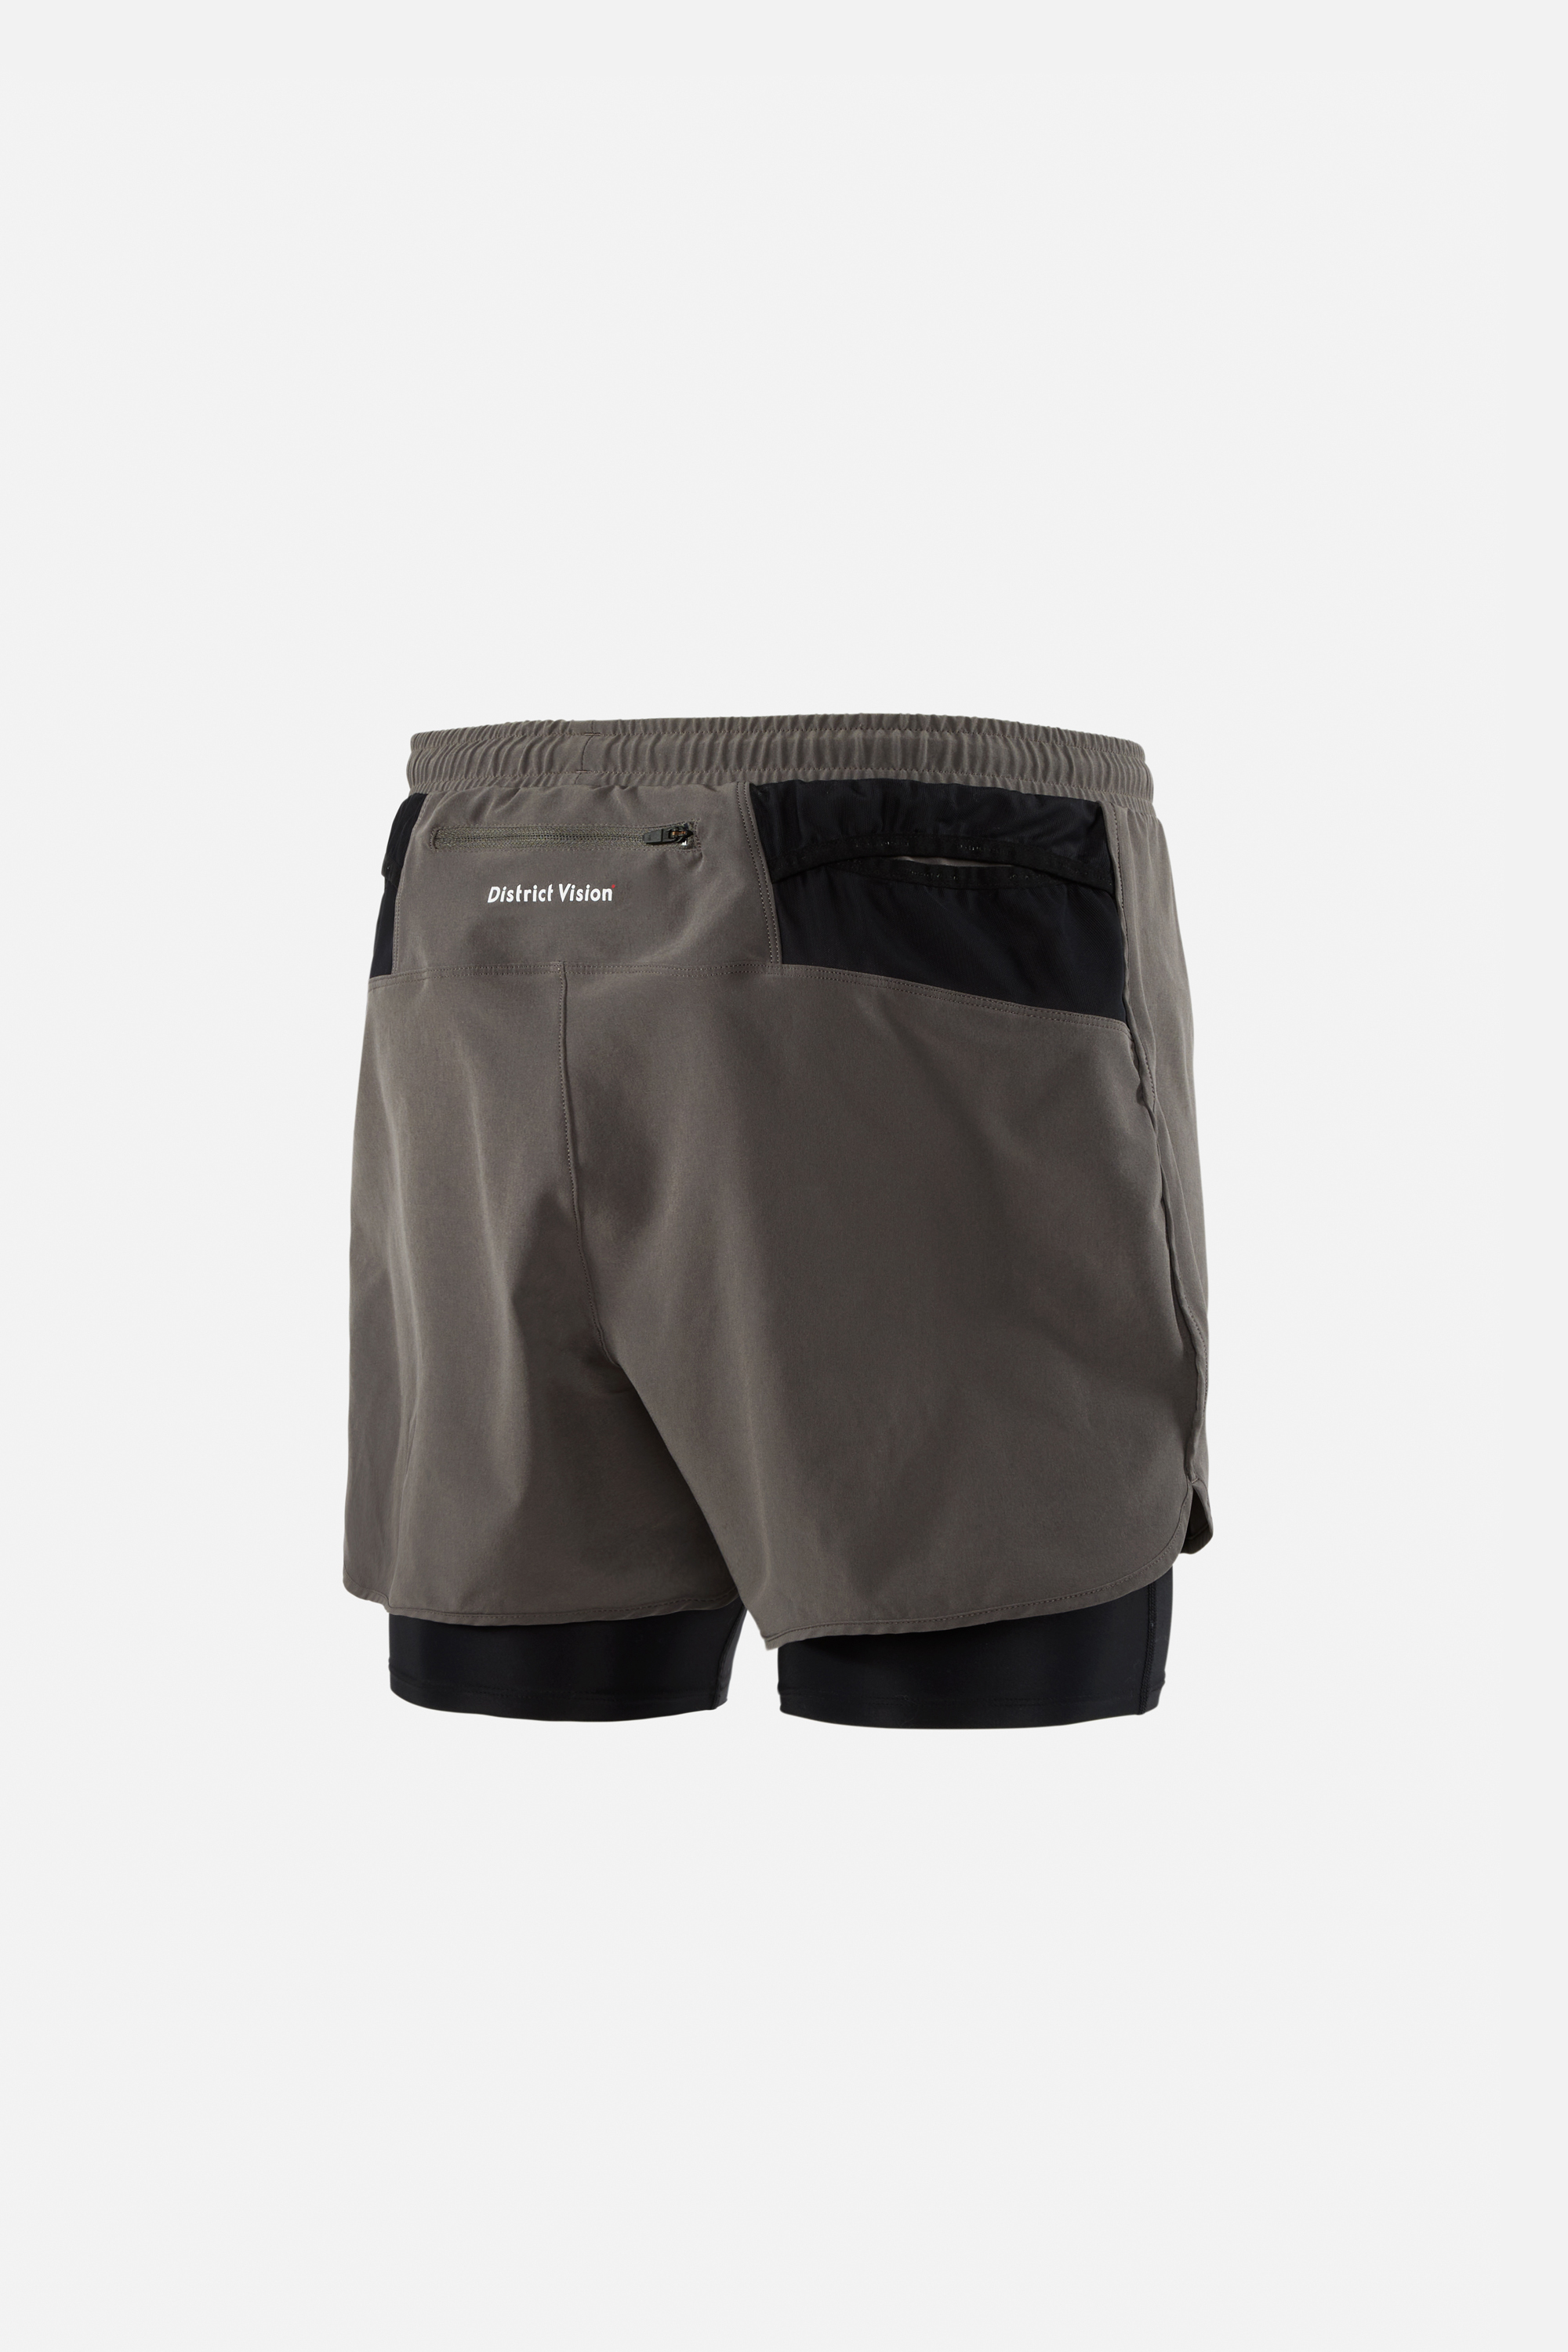 Aaron Layered Shorts, Black/Infrared